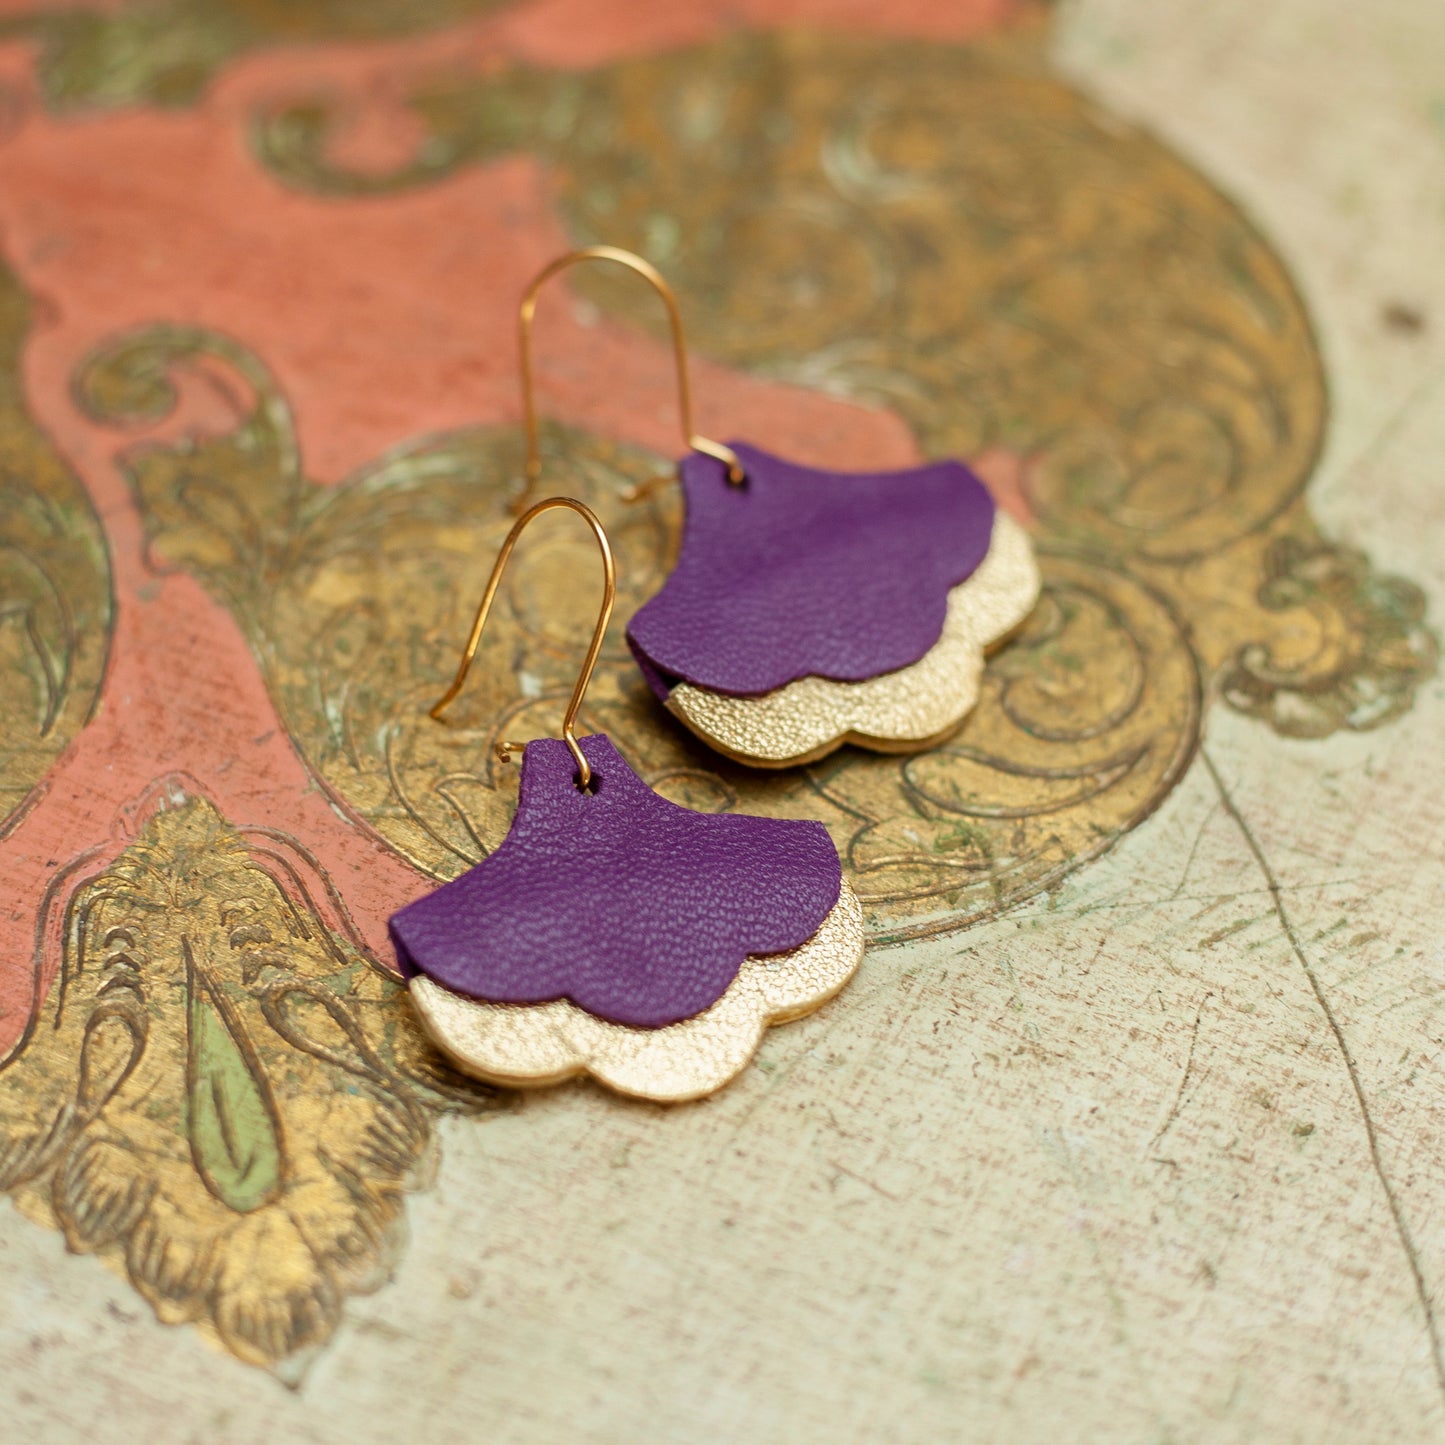 Ginkgo Biloba earrings in purple and gold leather